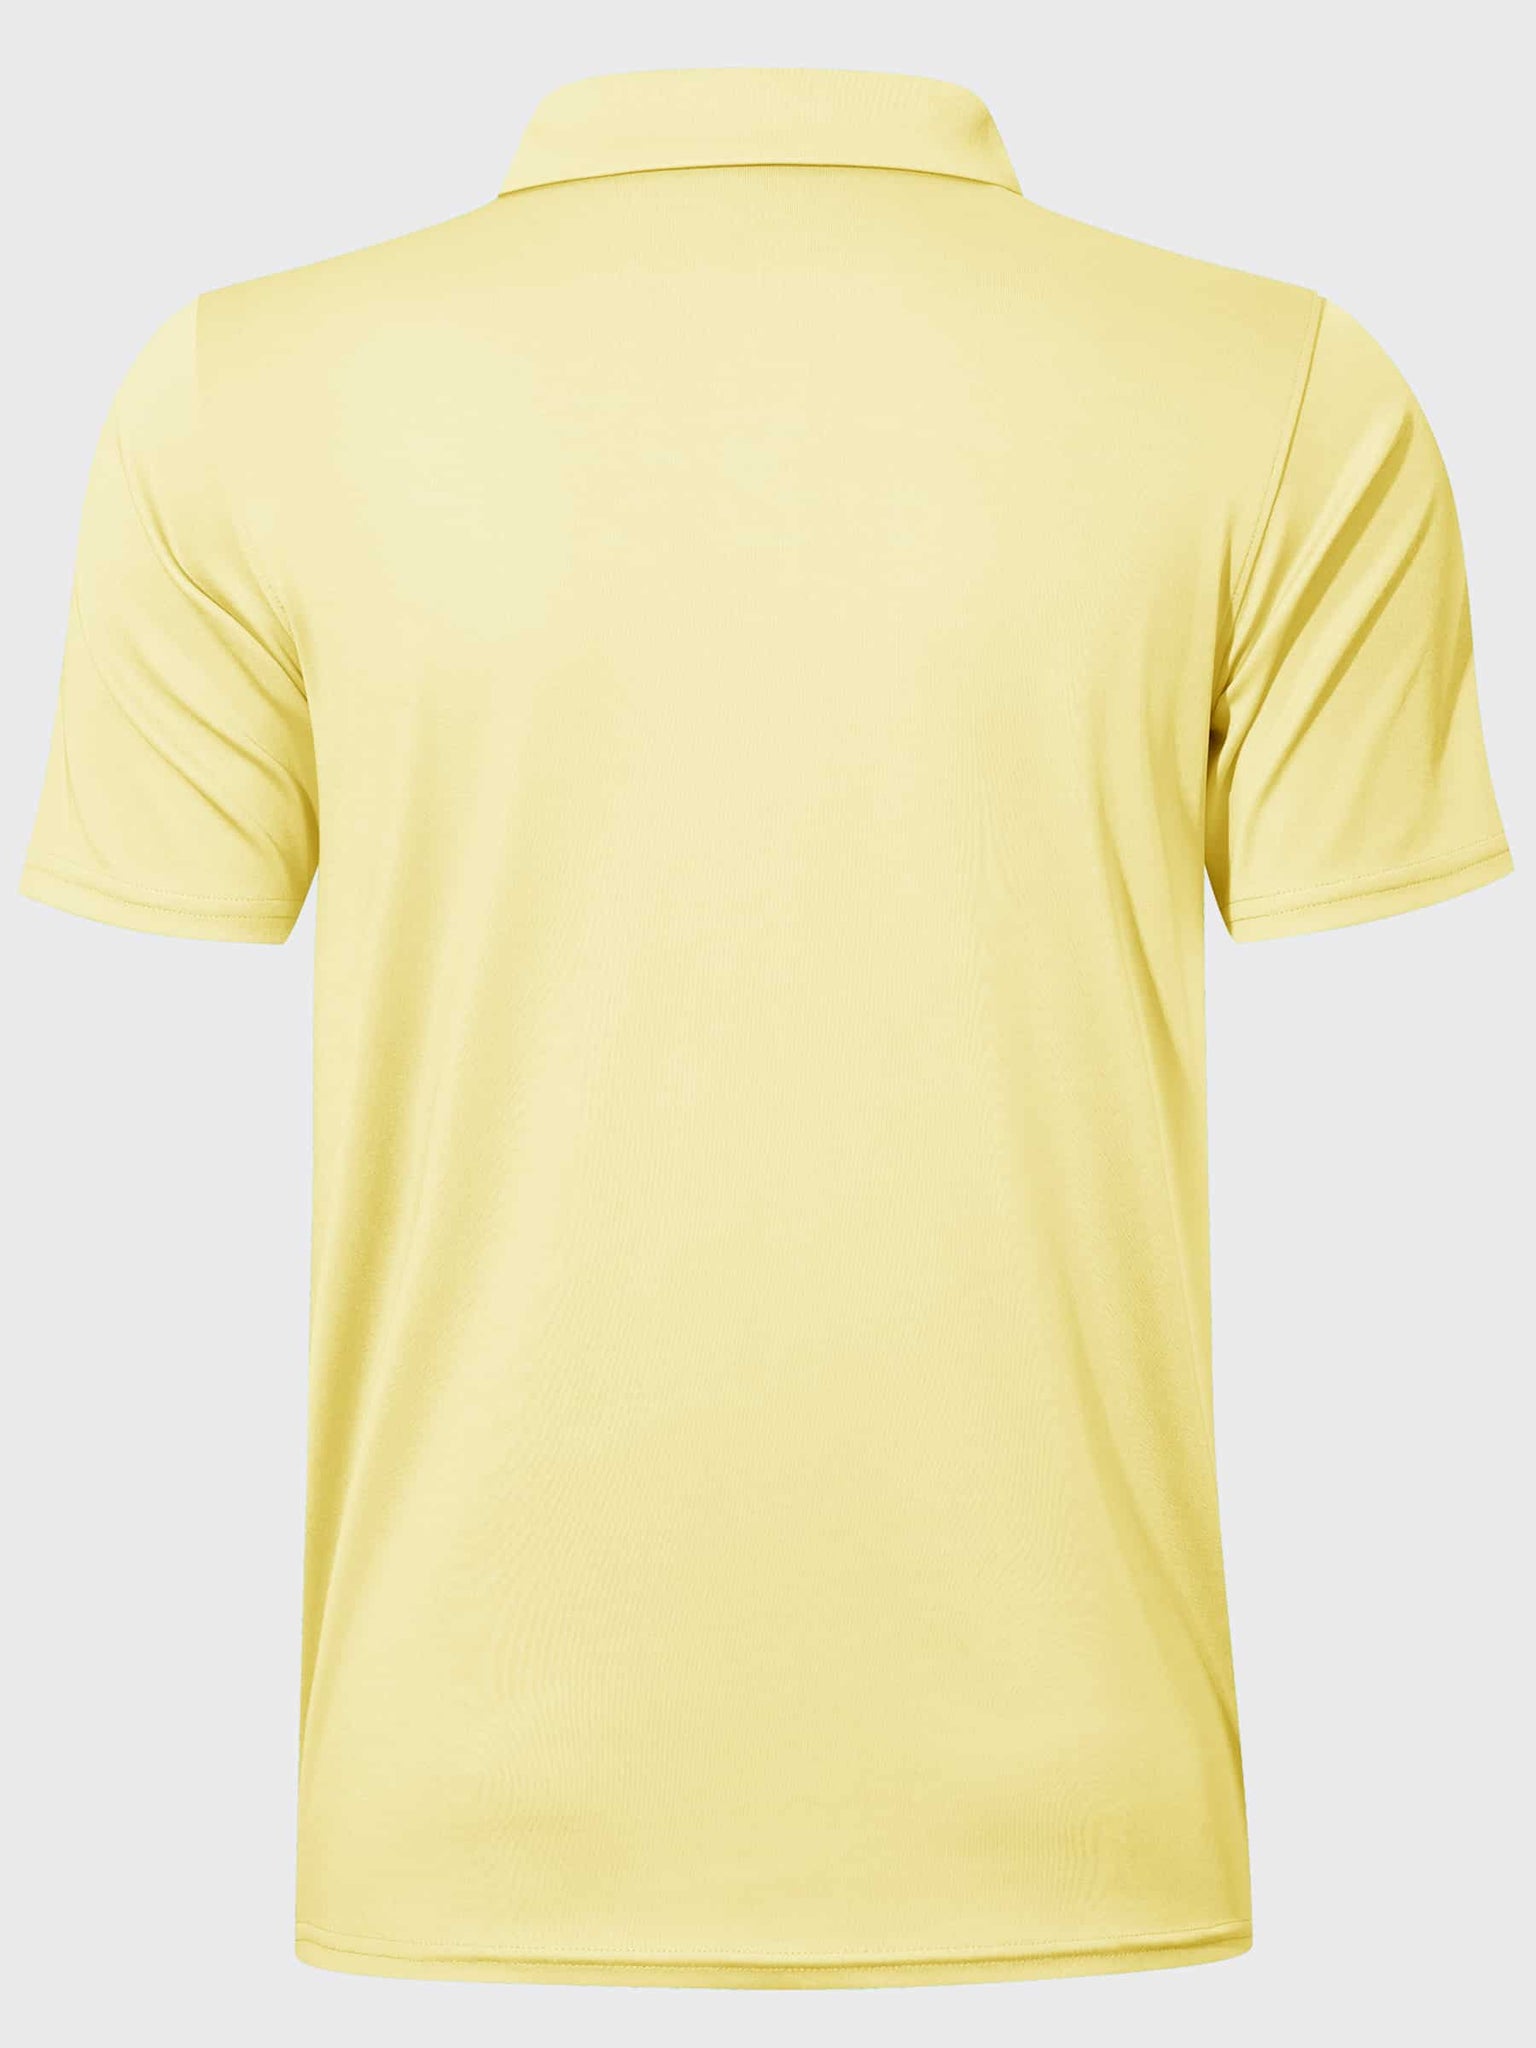 Youth Golf Polo Sun Shirts_Yellow_laydown3